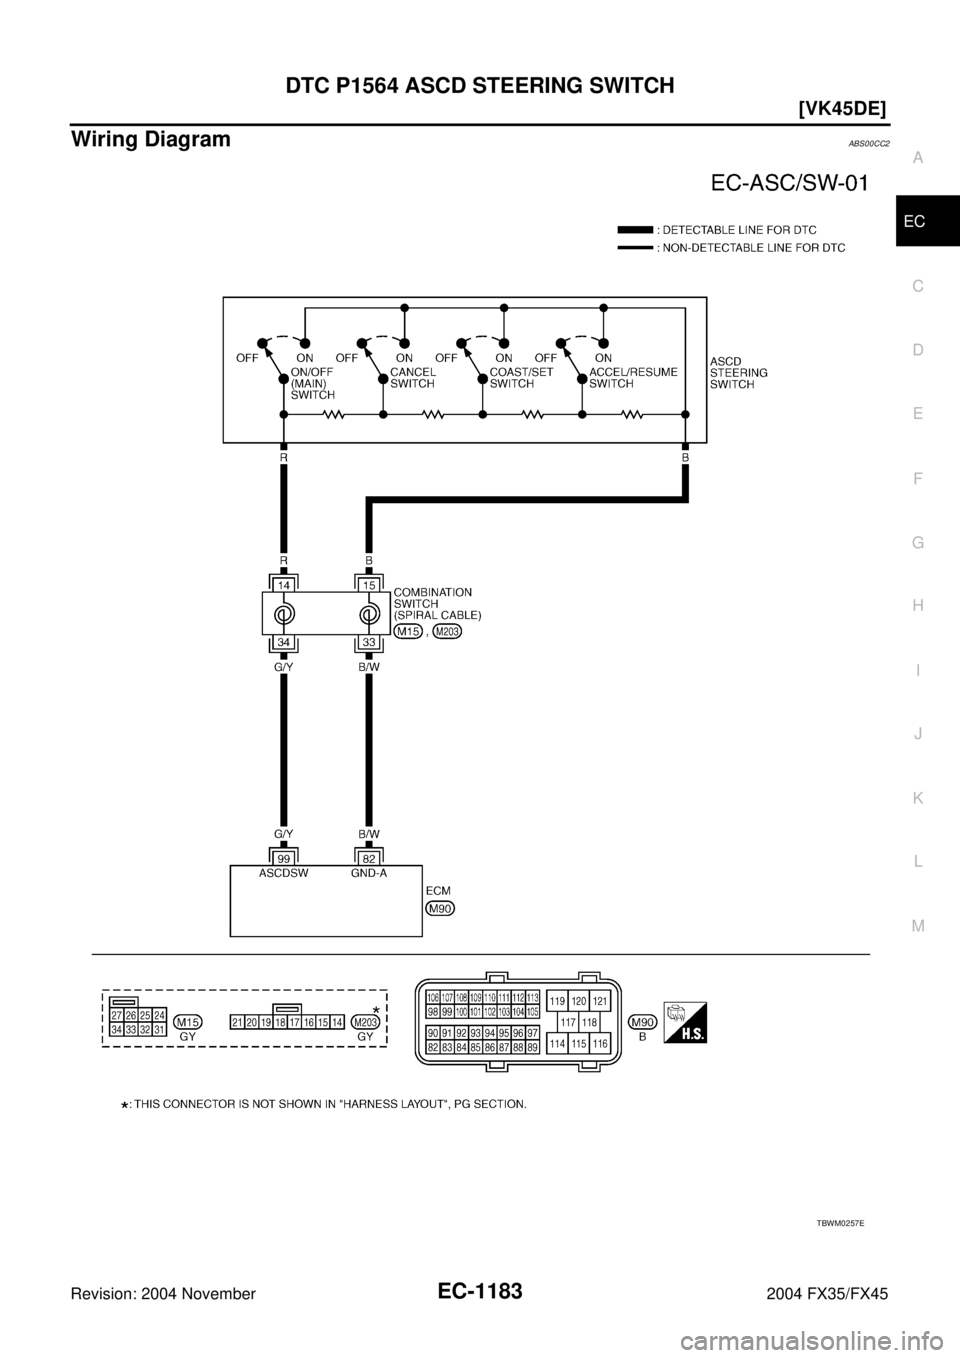 INFINITI FX35 2004  Service Manual DTC P1564 ASCD STEERING SWITCH
EC-1183
[VK45DE]
C
D
E
F
G
H
I
J
K
L
MA
EC
Revision: 2004 November 2004 FX35/FX45
Wiring DiagramABS00CC2
TBWM0257E 